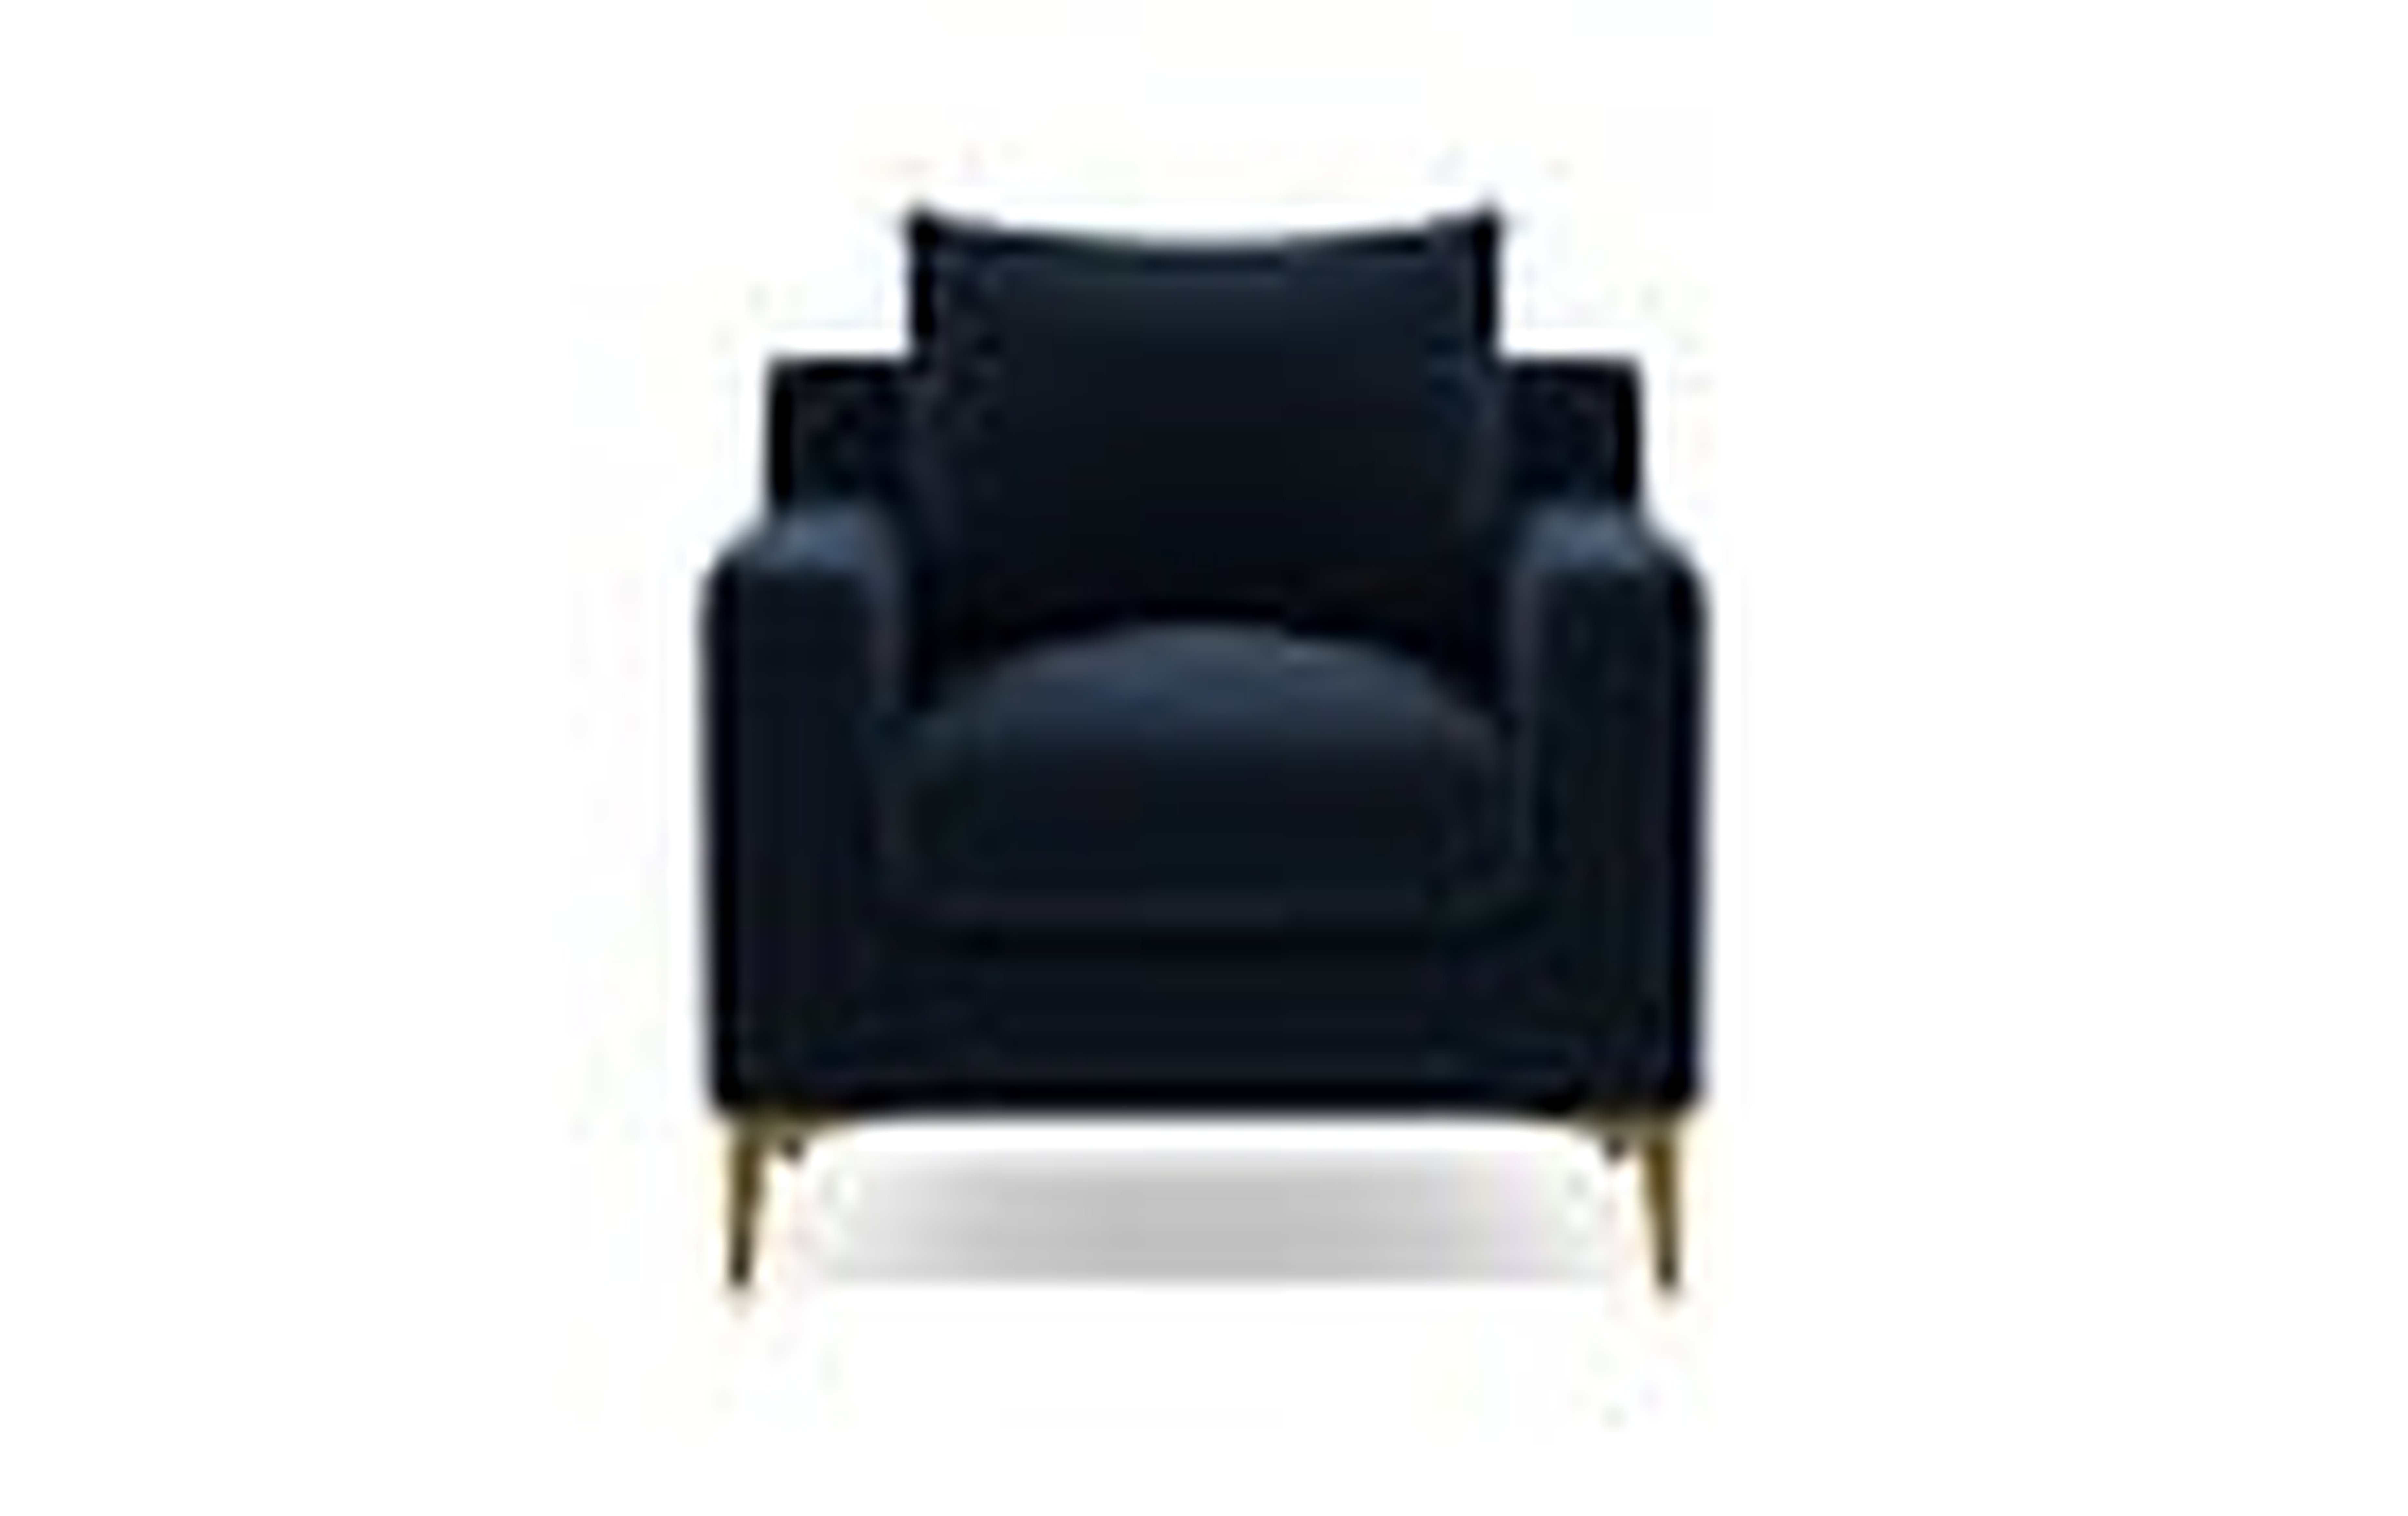 Sloan Petite Chair - Interior Define